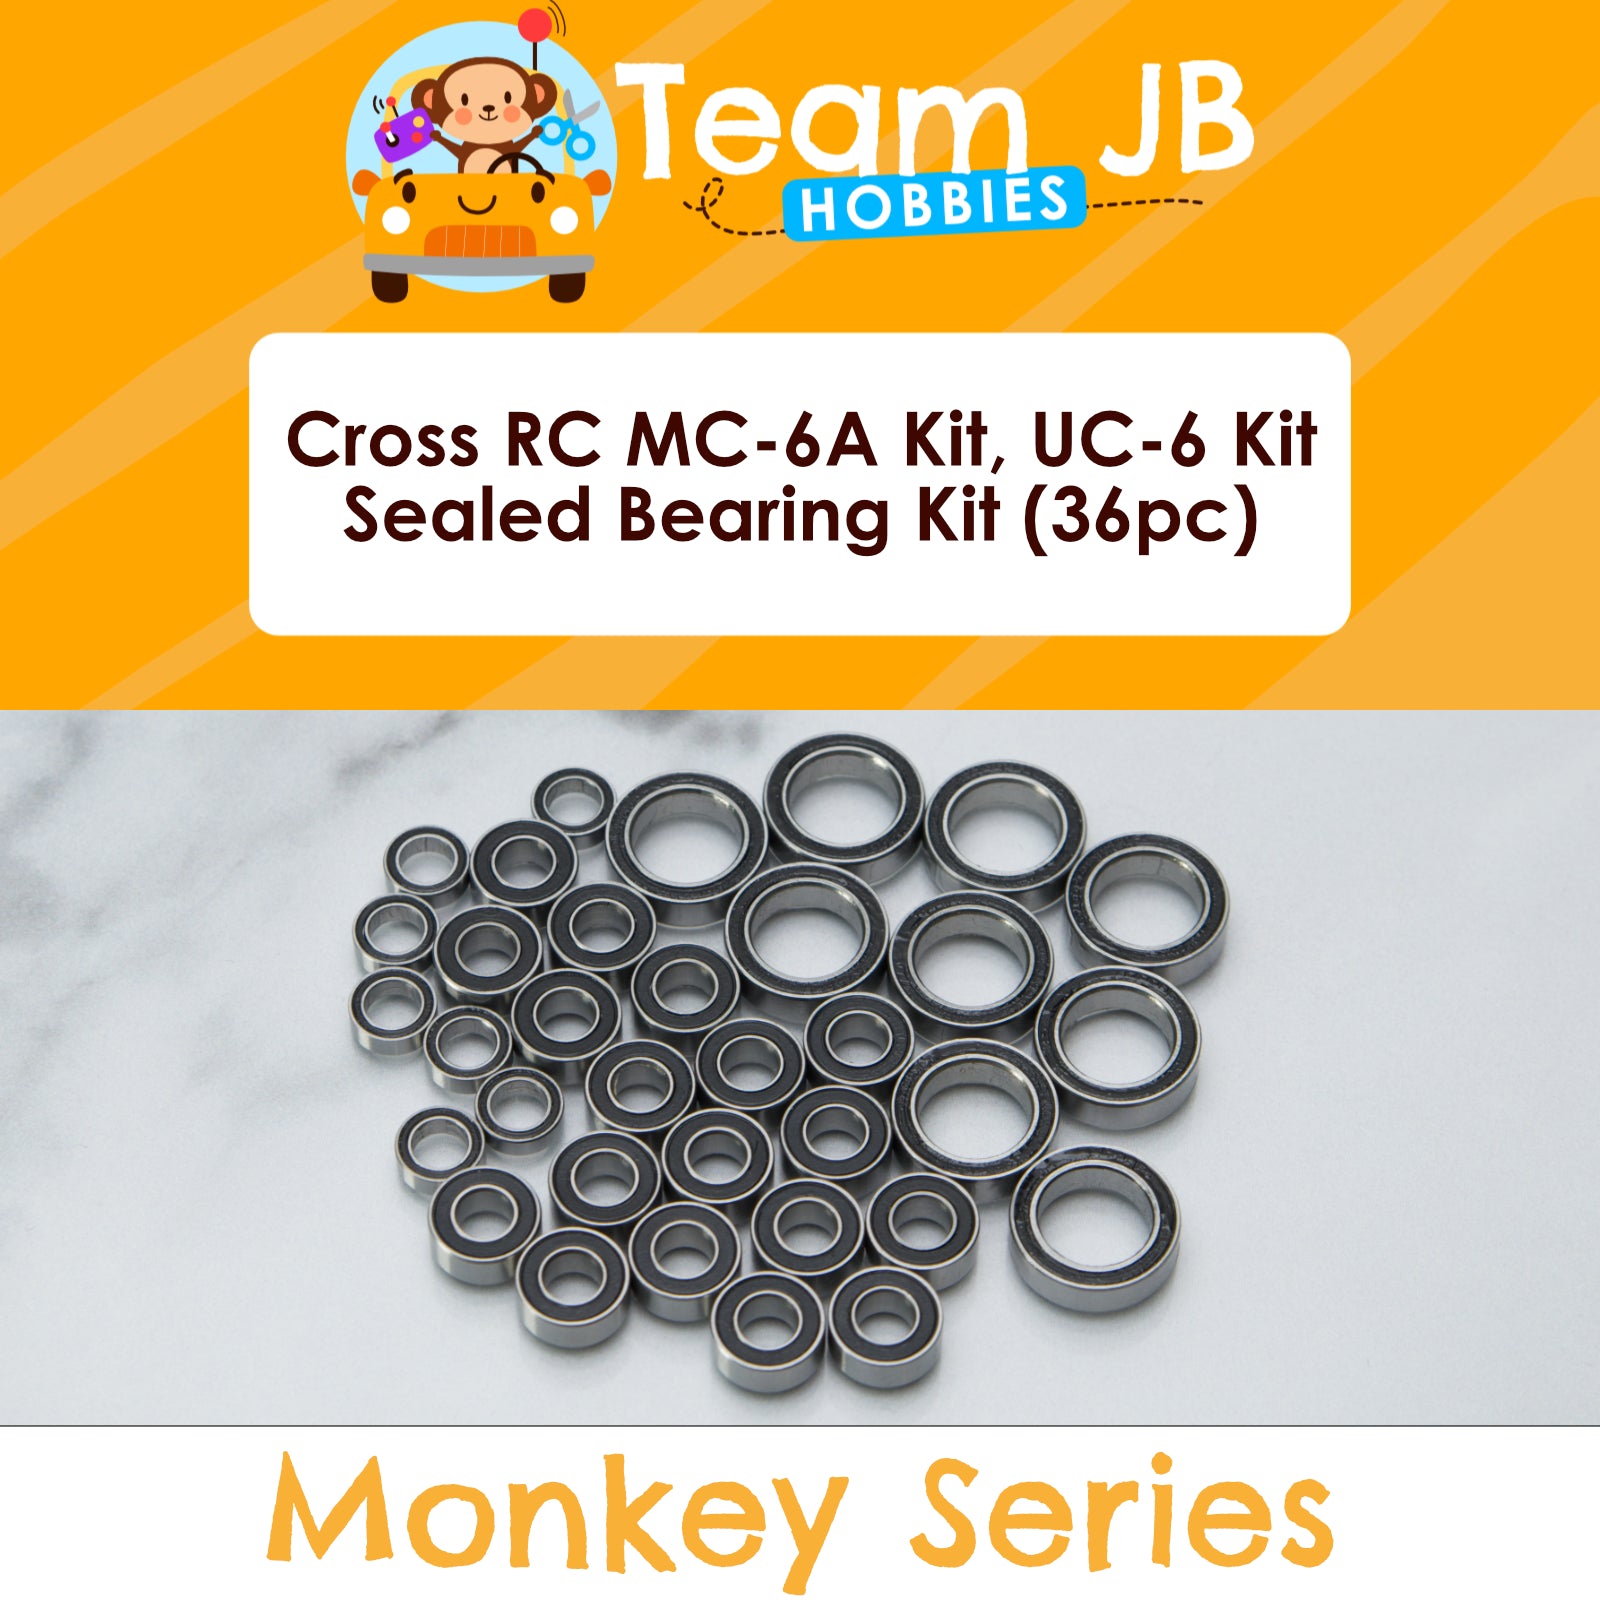 Cross RC MC-6A Kit, UC-6 Kit - Sealed Bearing Kit